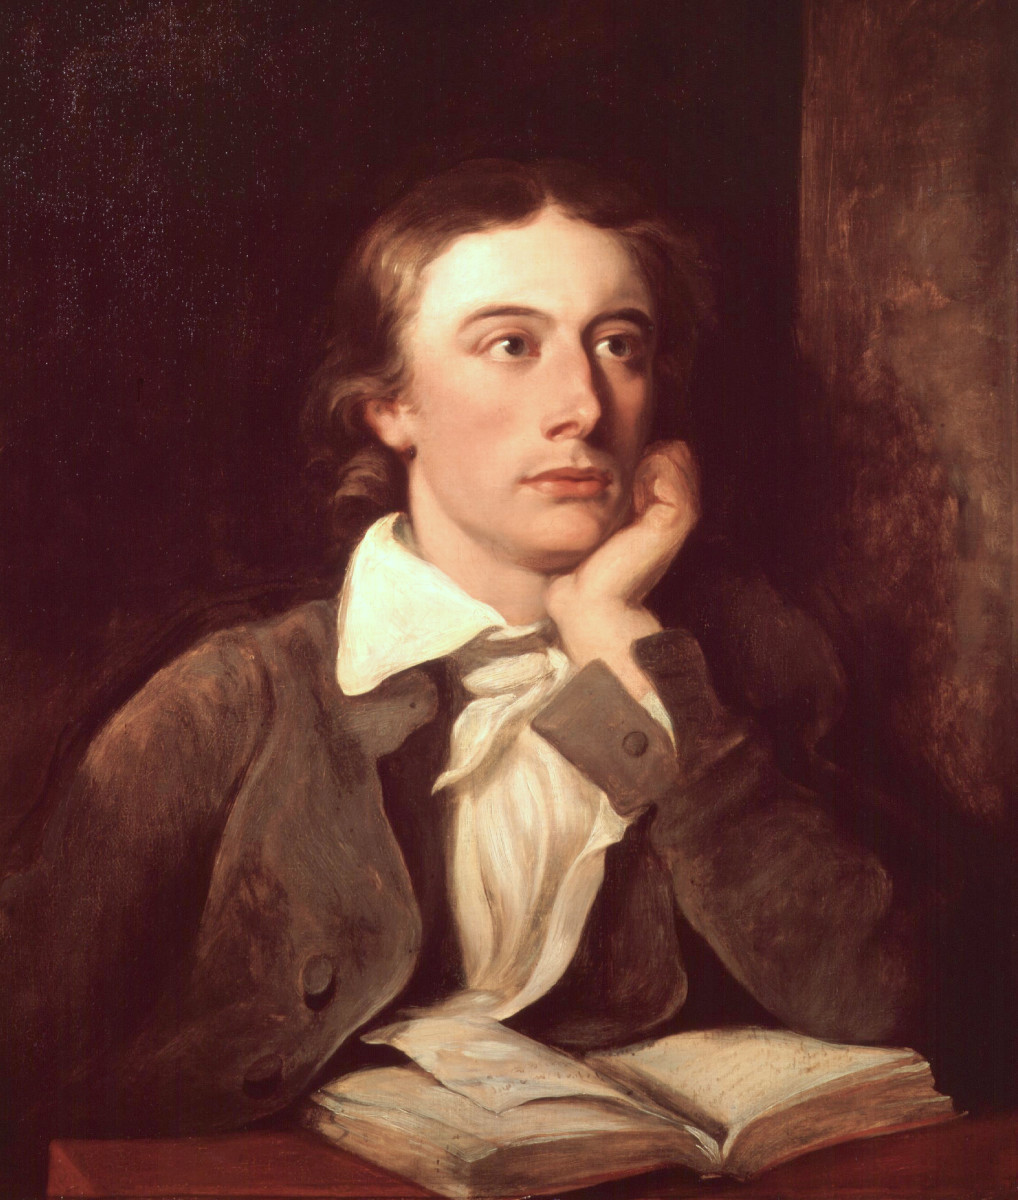 John Keats poem analysis